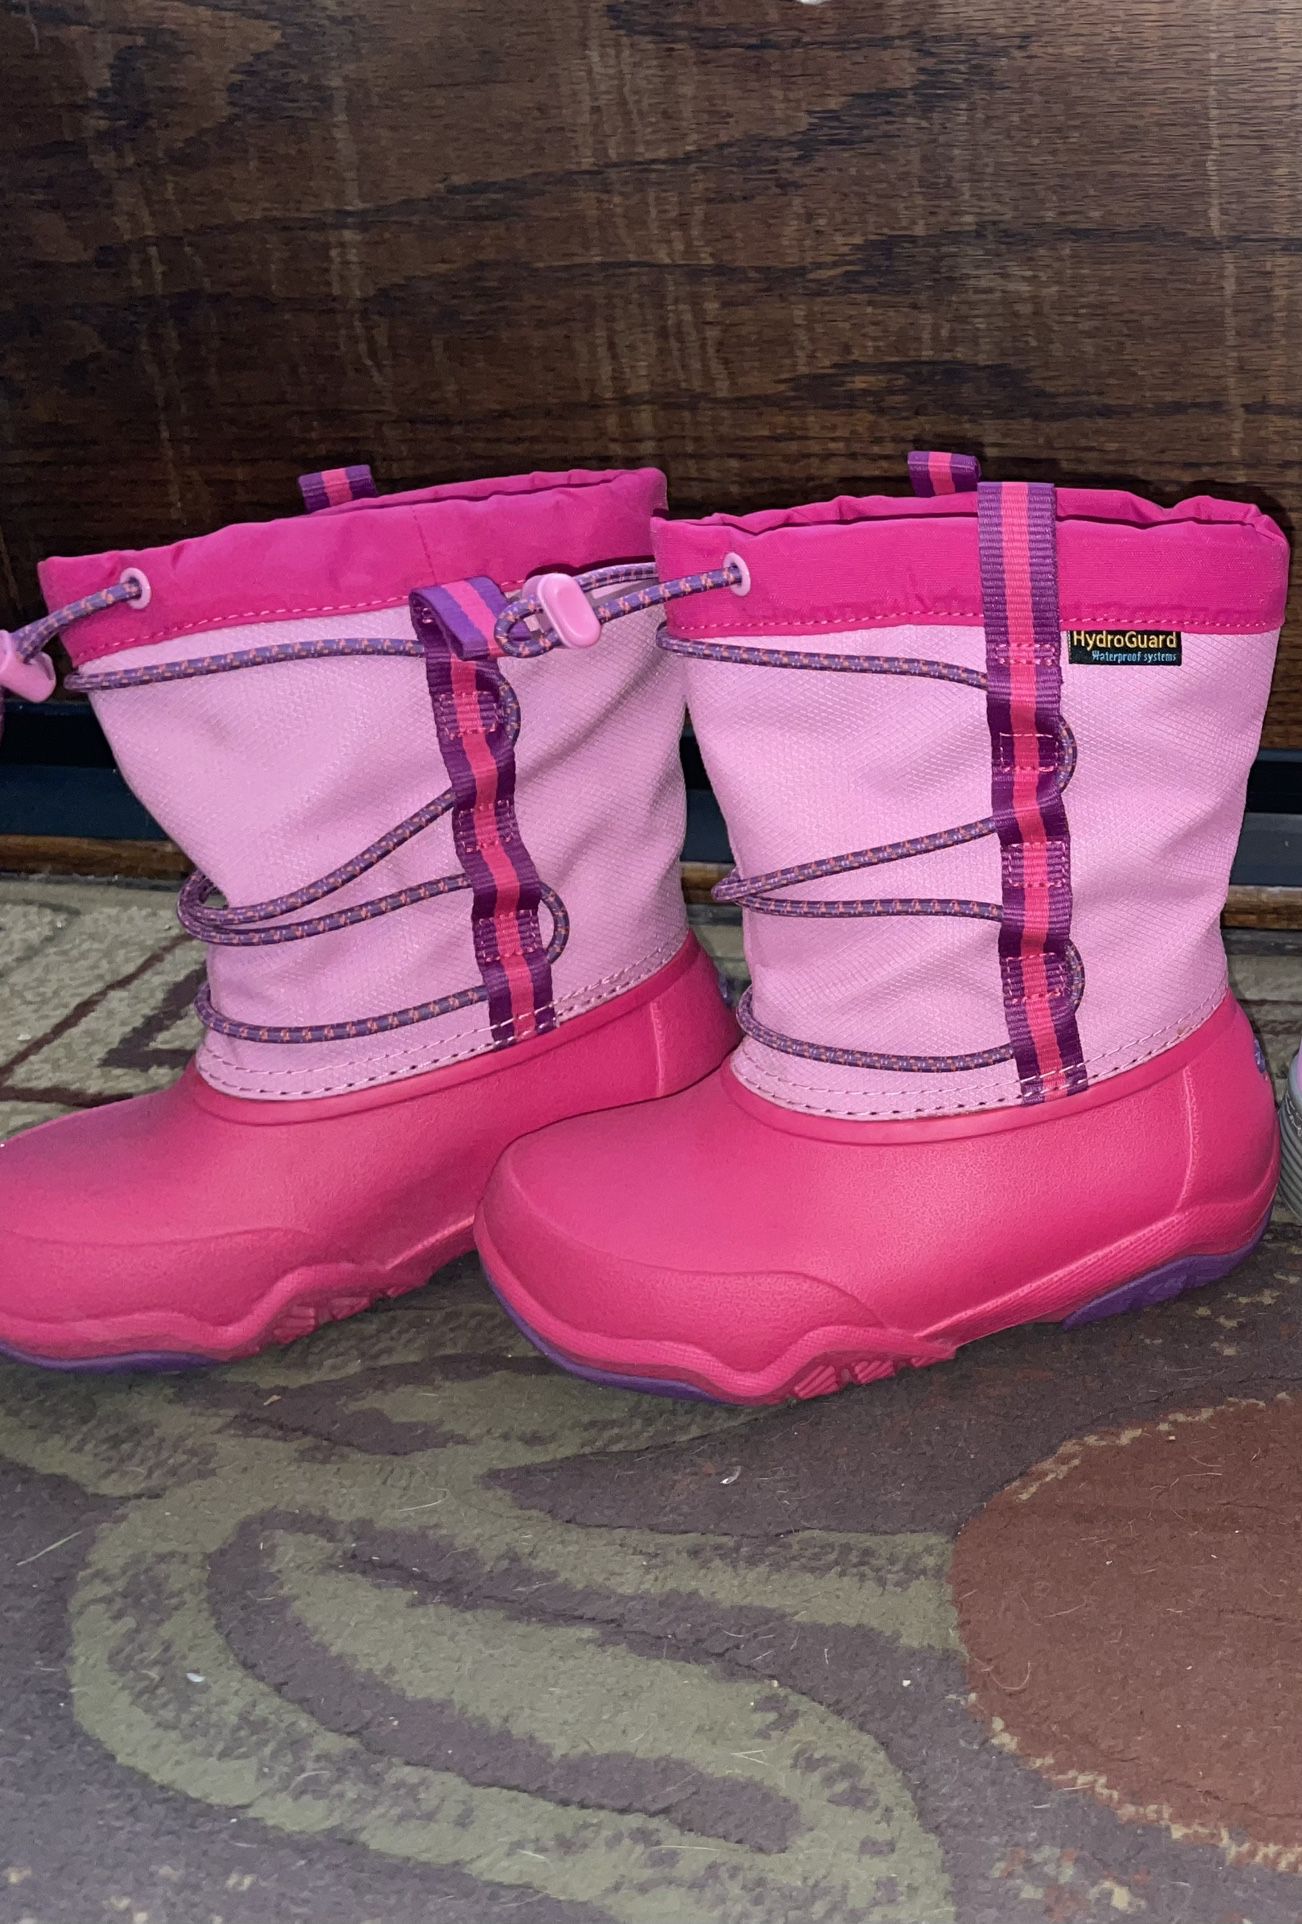 Crocs Kids' Size c 9 Waterproof Boots Candy Pink botas de nieve para niños talla 9